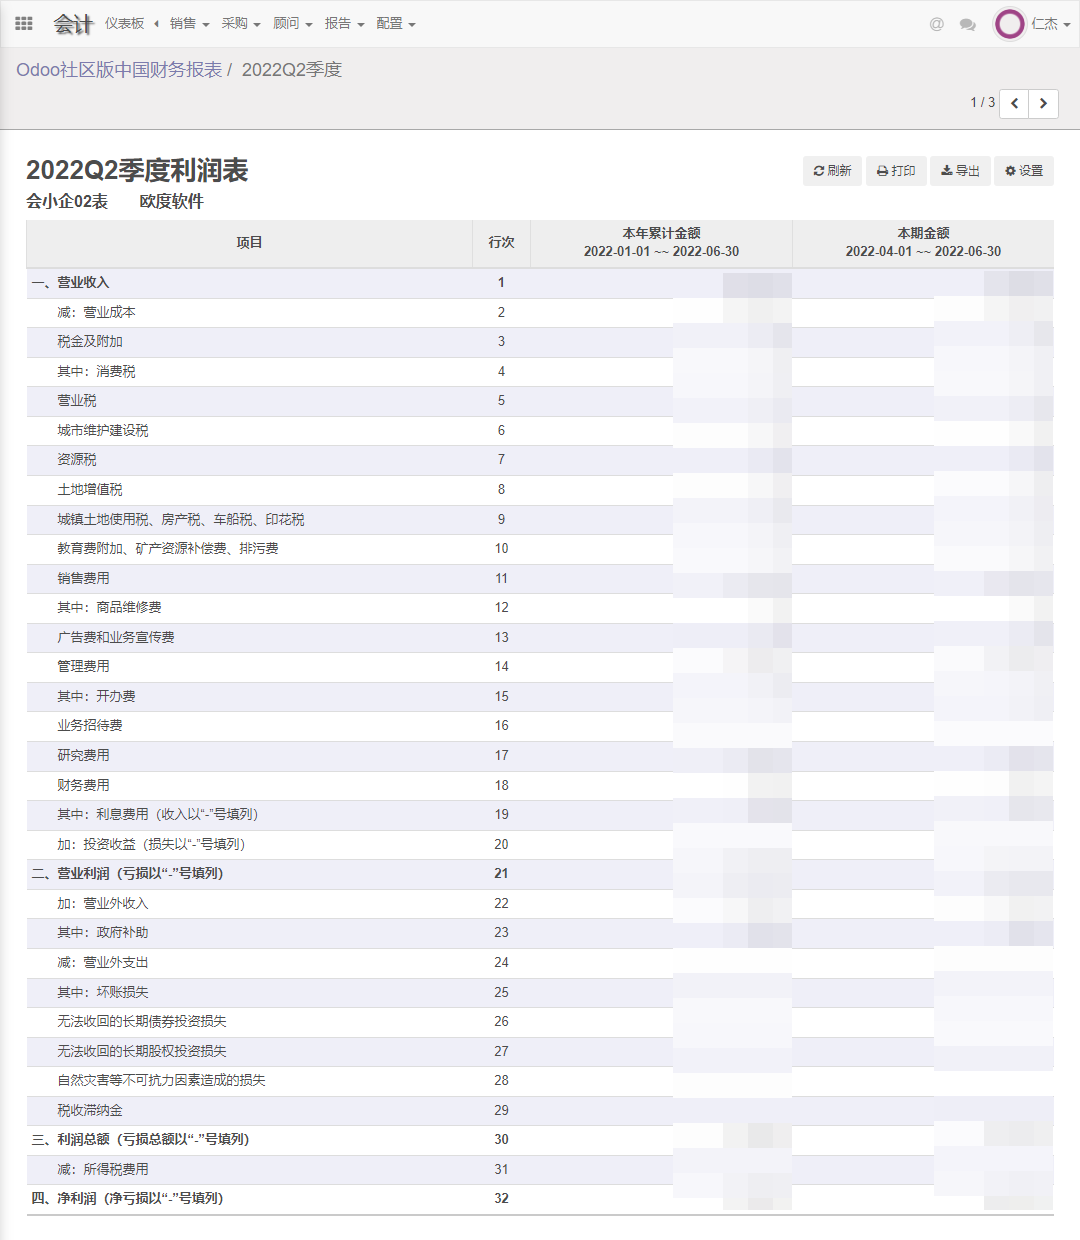 Odoo社区版中国财务会计损益利润表